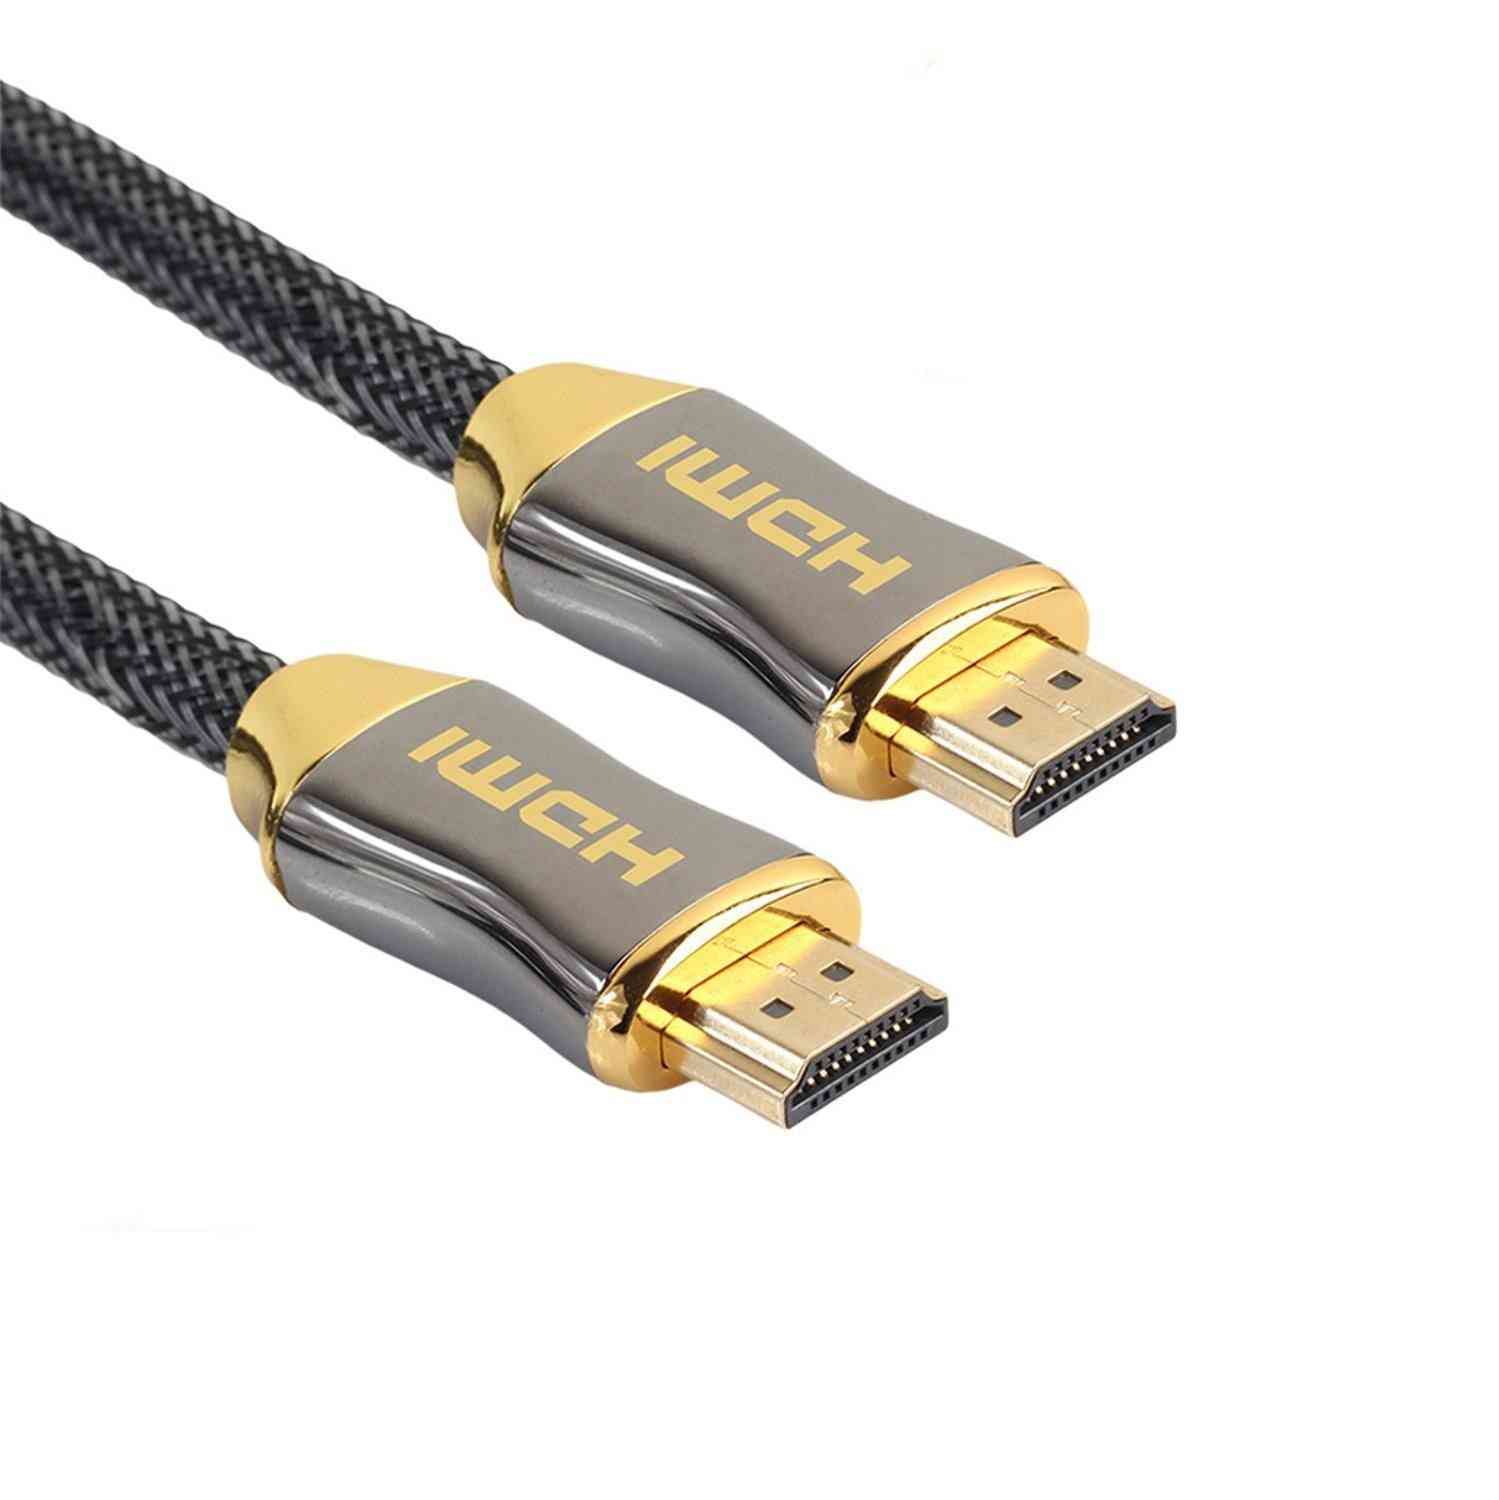 Hdmi brzi 2.0 kabel presvučenog kabela za uhd, fhd, 3d xbox, ps3, ps4 i tv